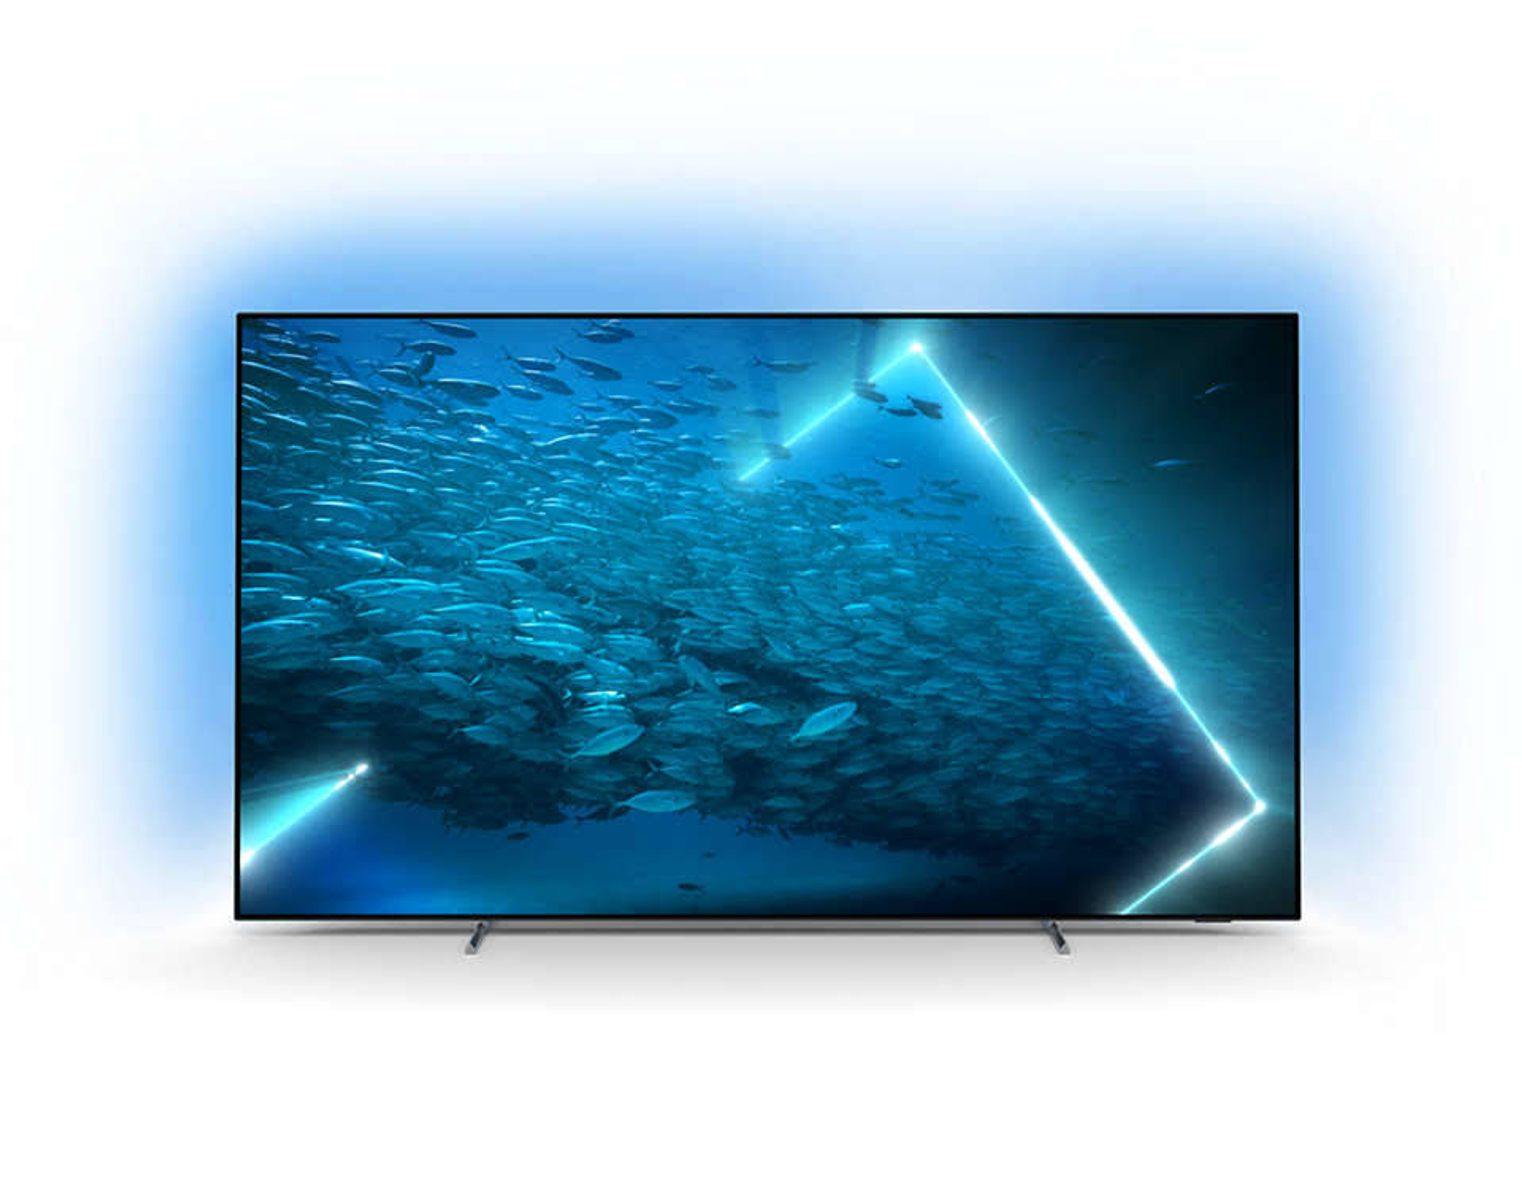 PHILIPS 55OLED707/12 OLED cm, 139 Zoll 11 (Flat, (R)) TV UHD Ambilight, TV™ 4K, 55 / Android